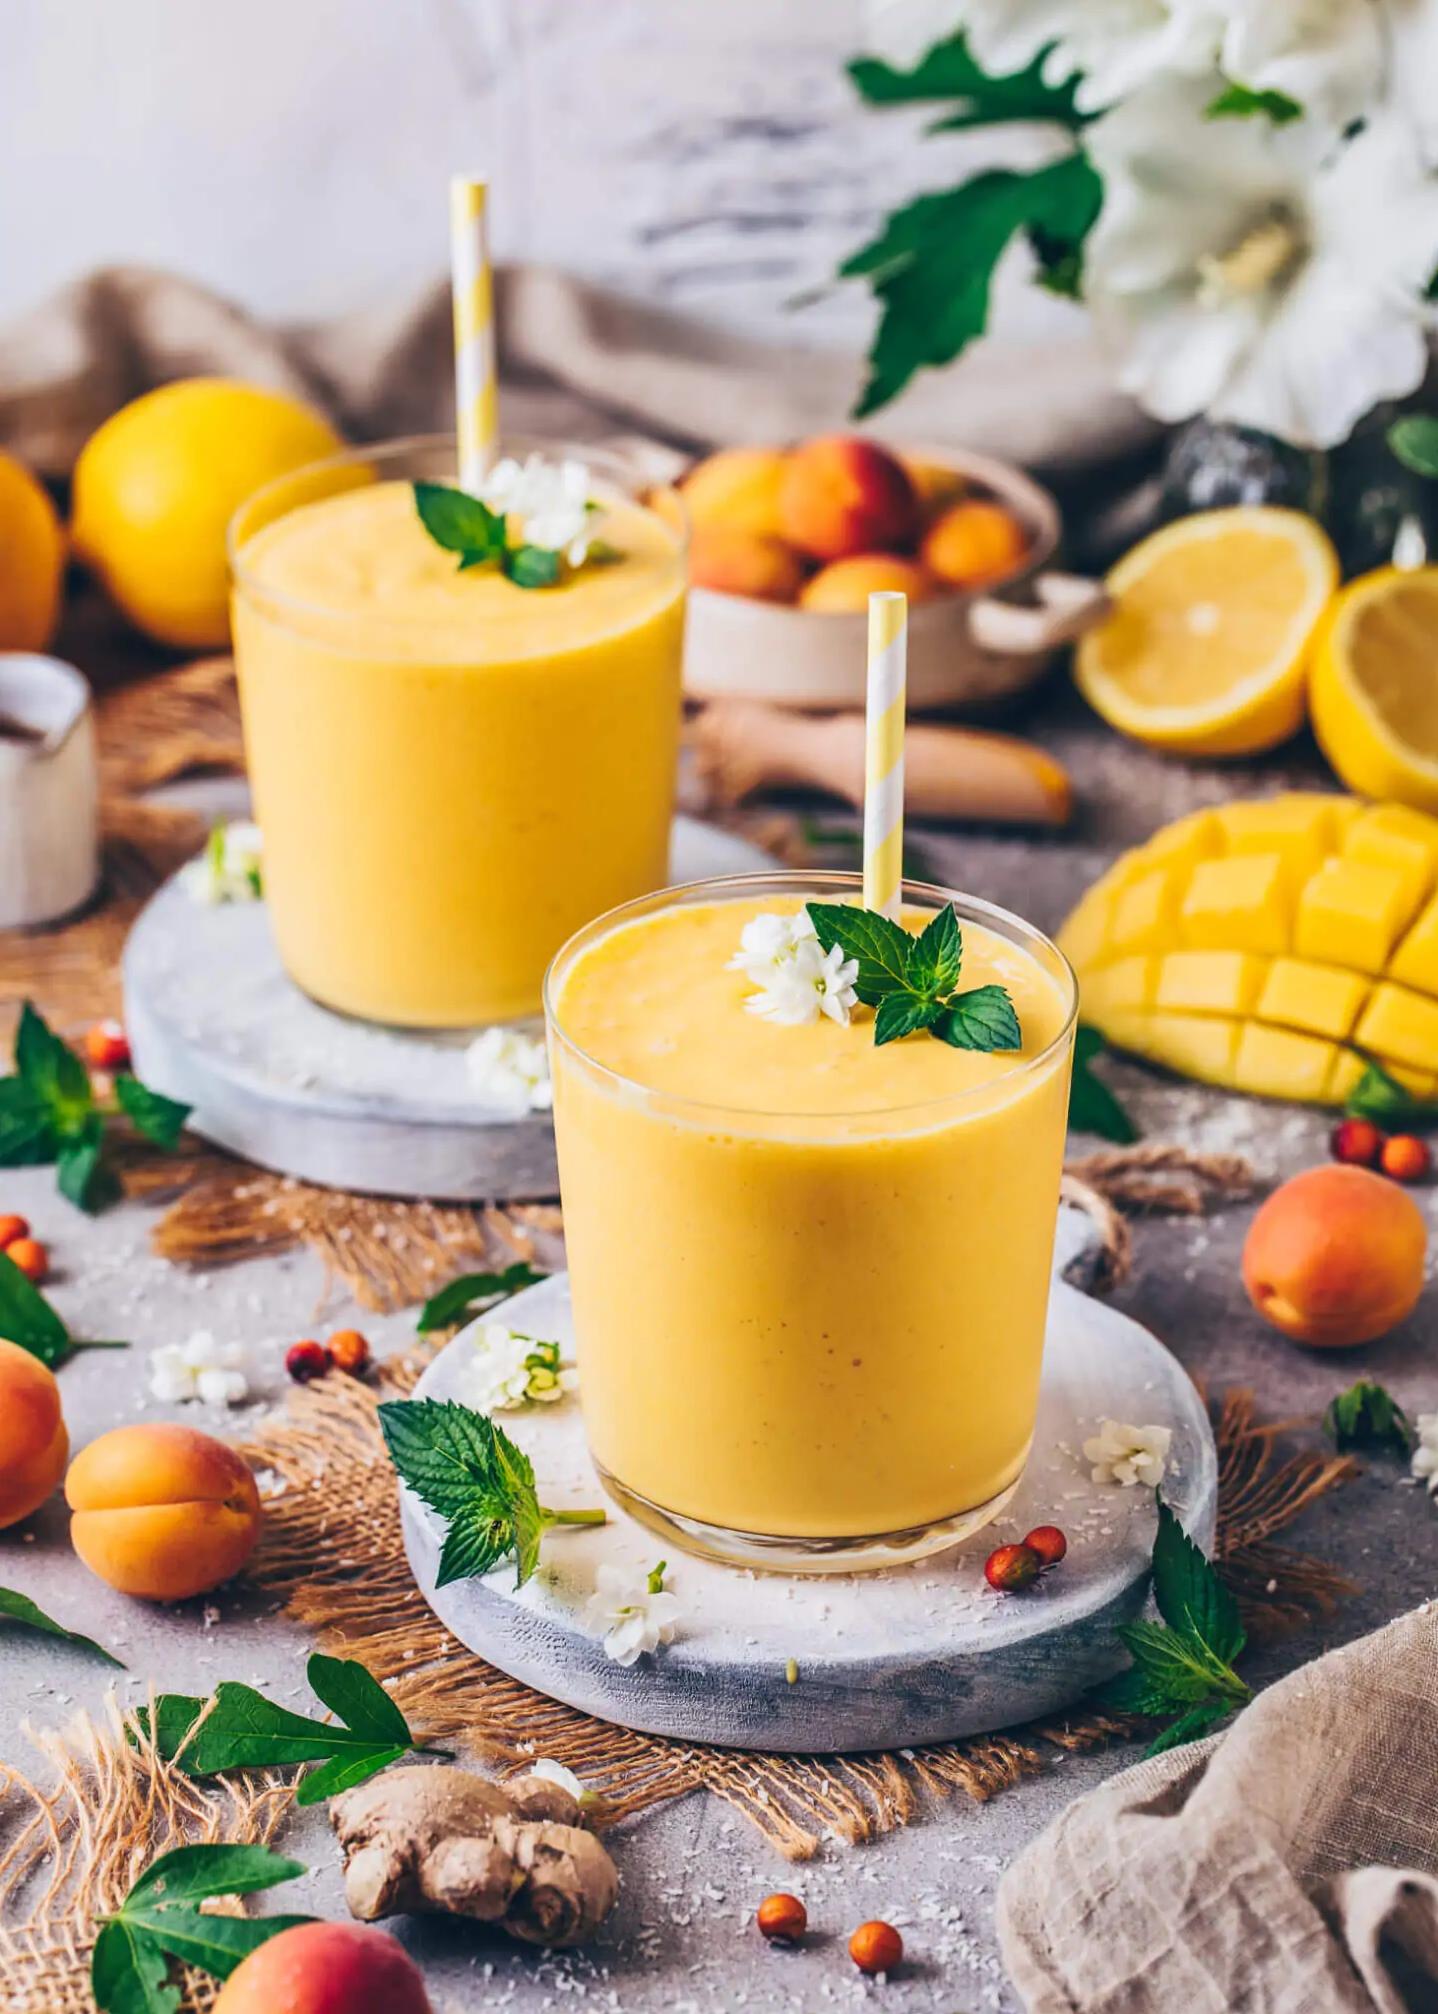  Sip on summer with this refreshing vegan mango lassi!